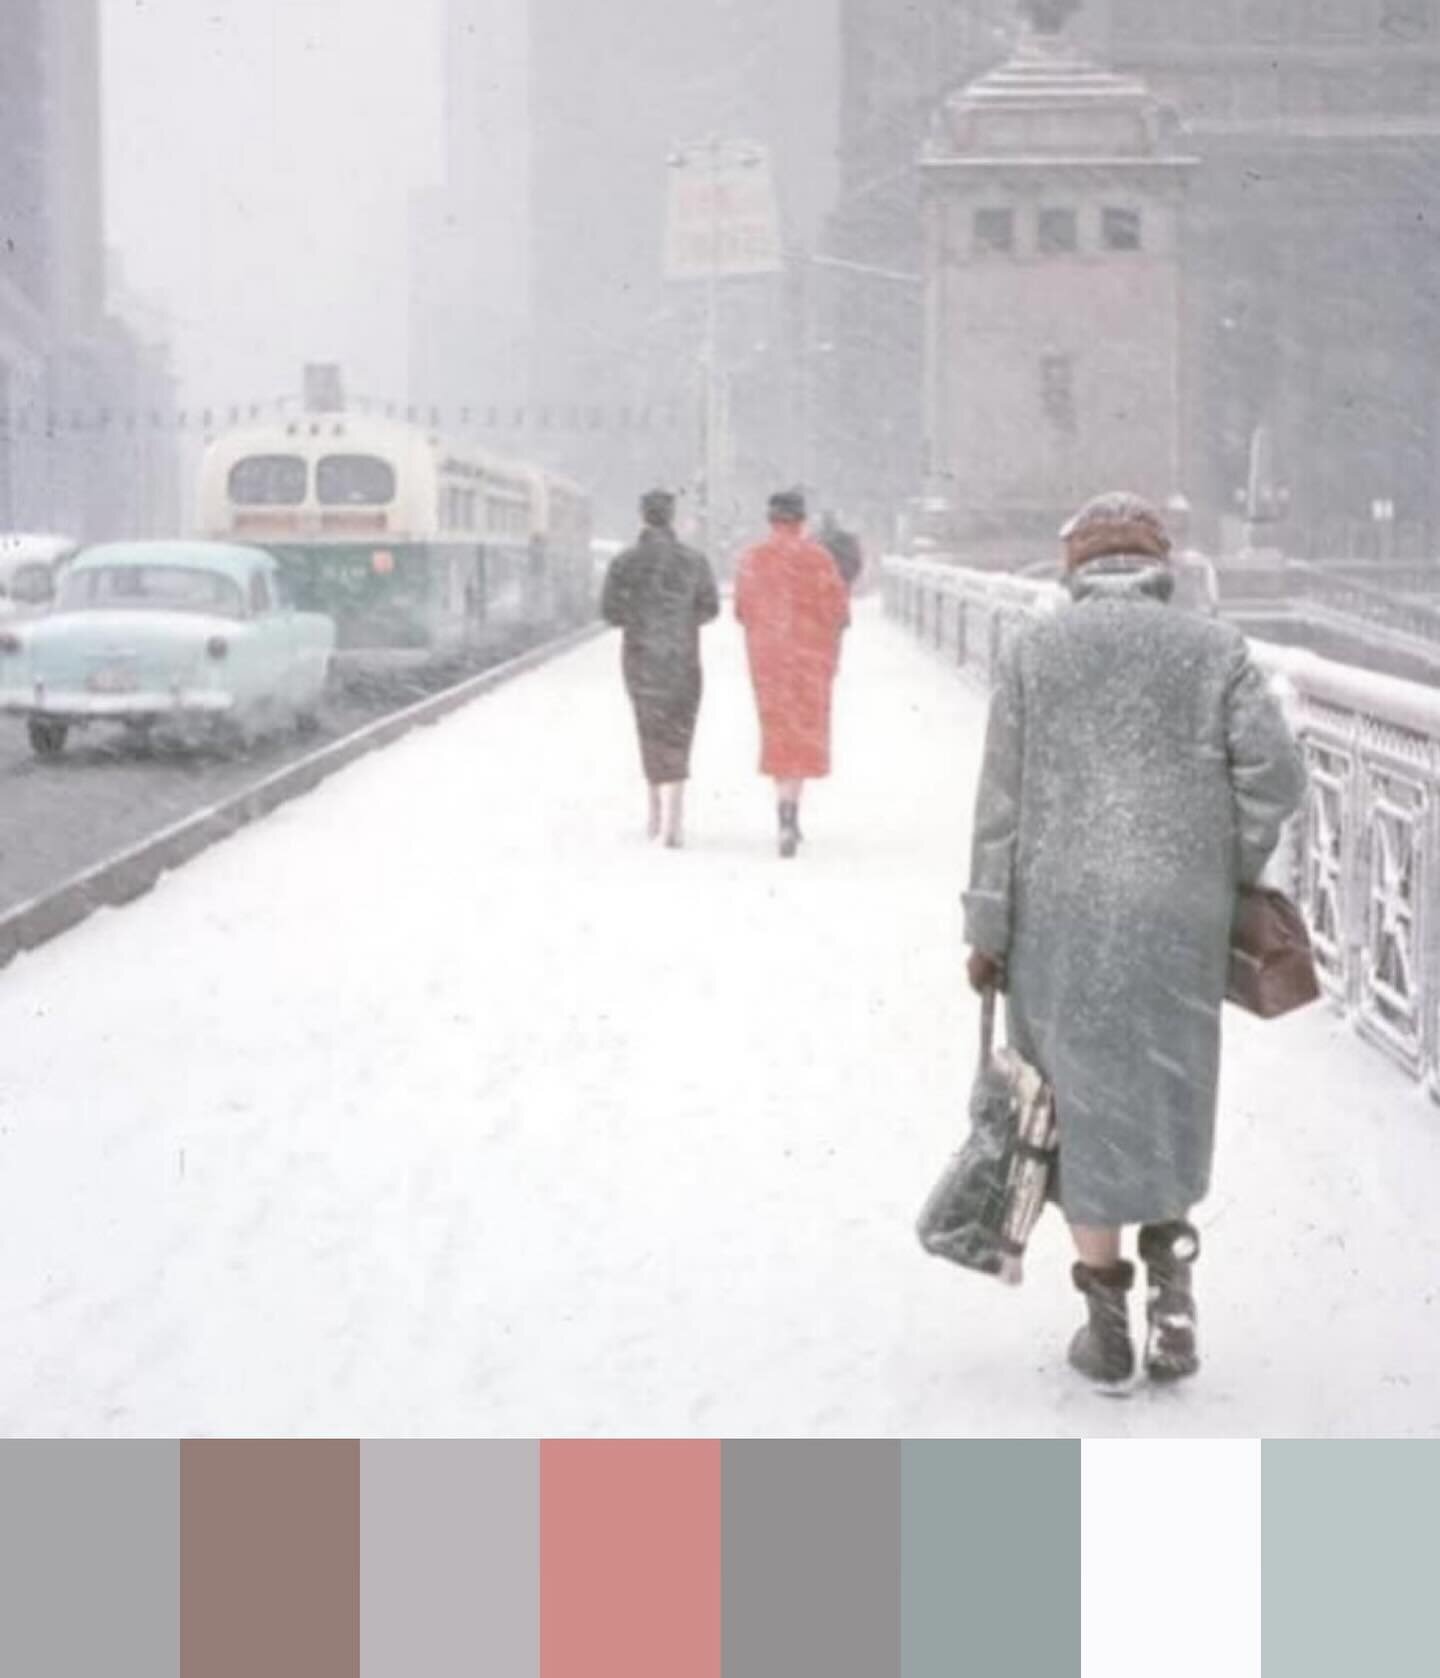 Happy winter Chicago 
#winterpalette  #artdirection  #vntagepalette  #vintagestyle  #vintagecolor